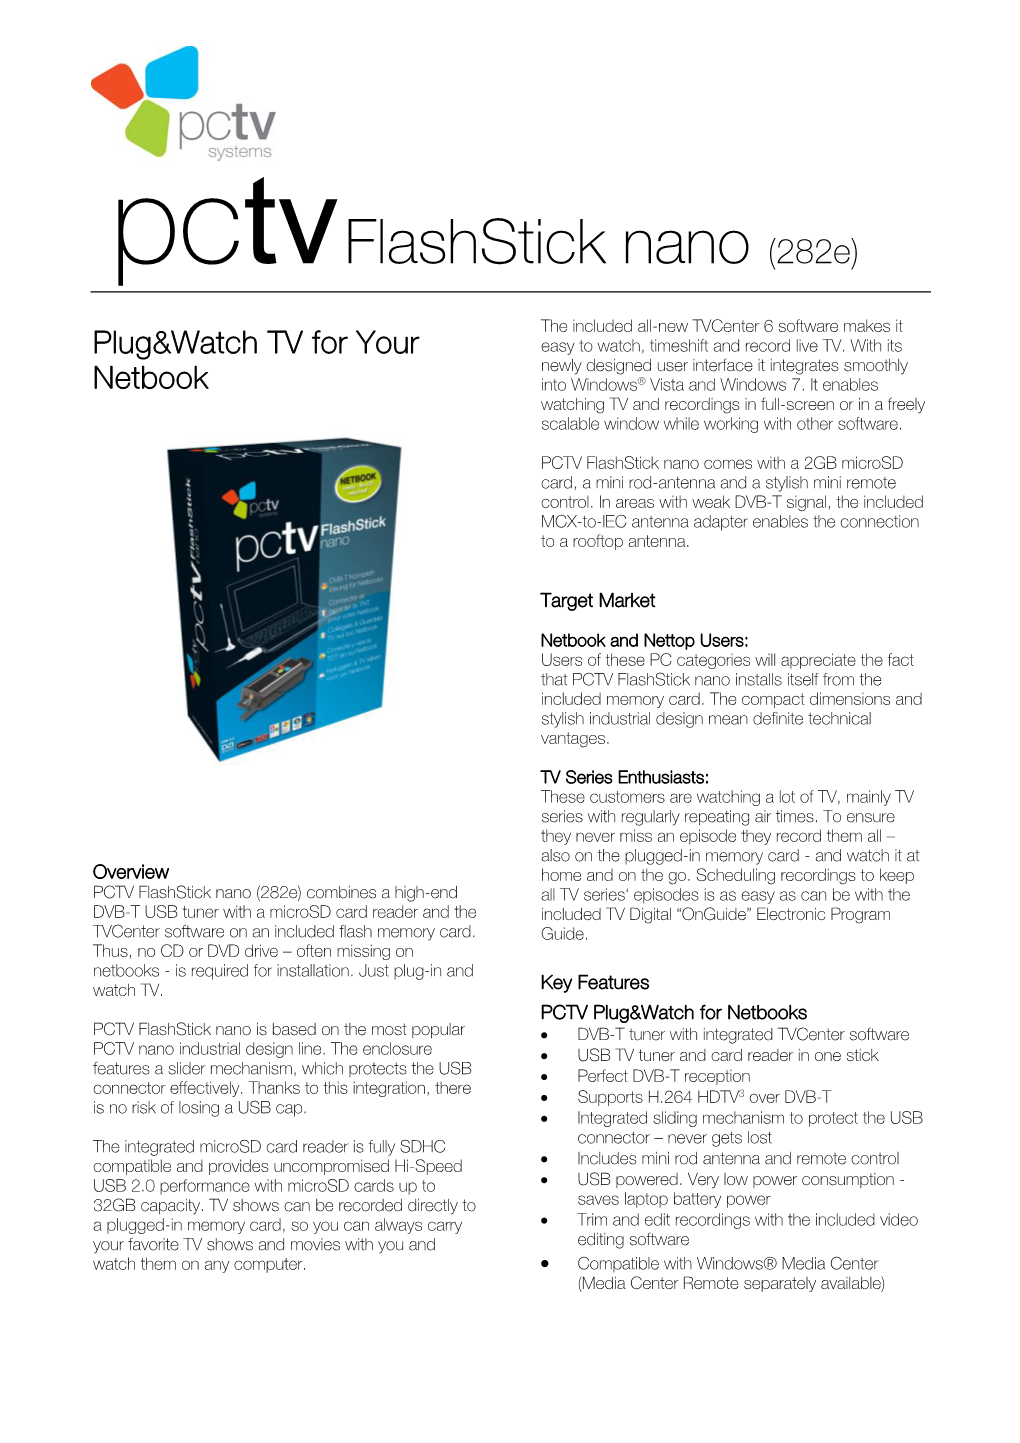 Product Profile PCTV Flashstick Nano (282E)